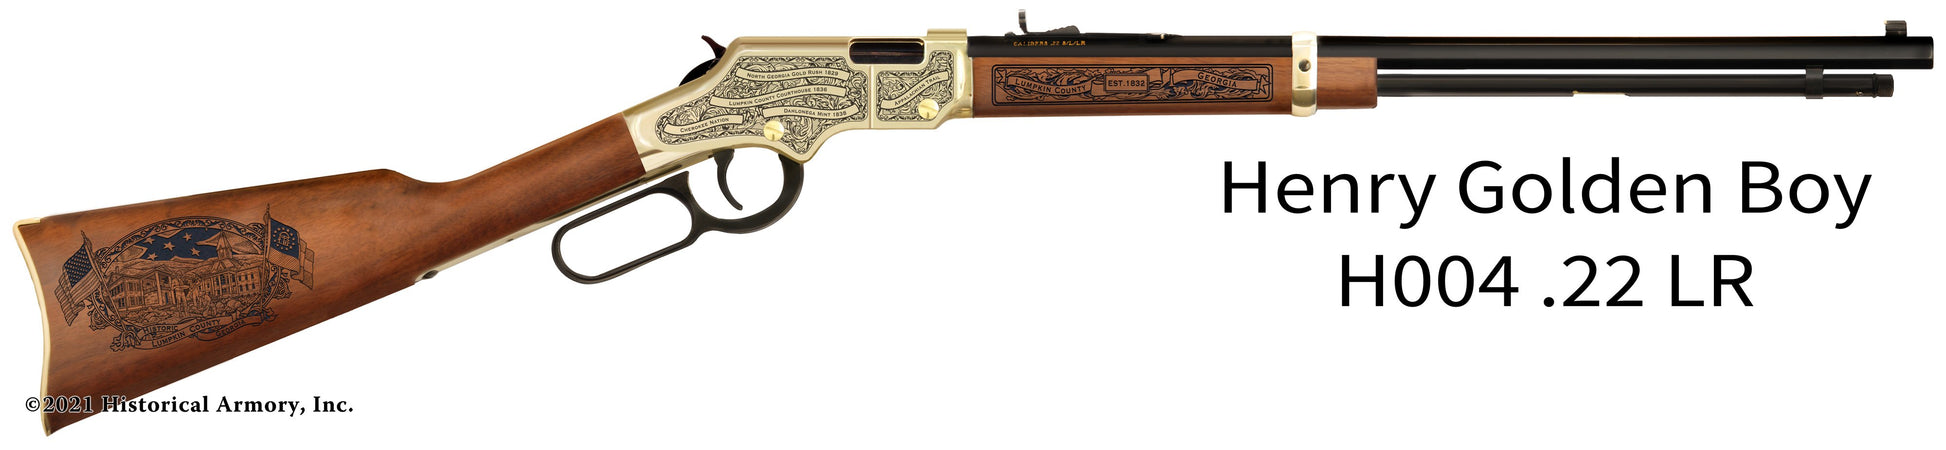 Lumpkin County Georgia Engraved Henry Golden Boy Rifle